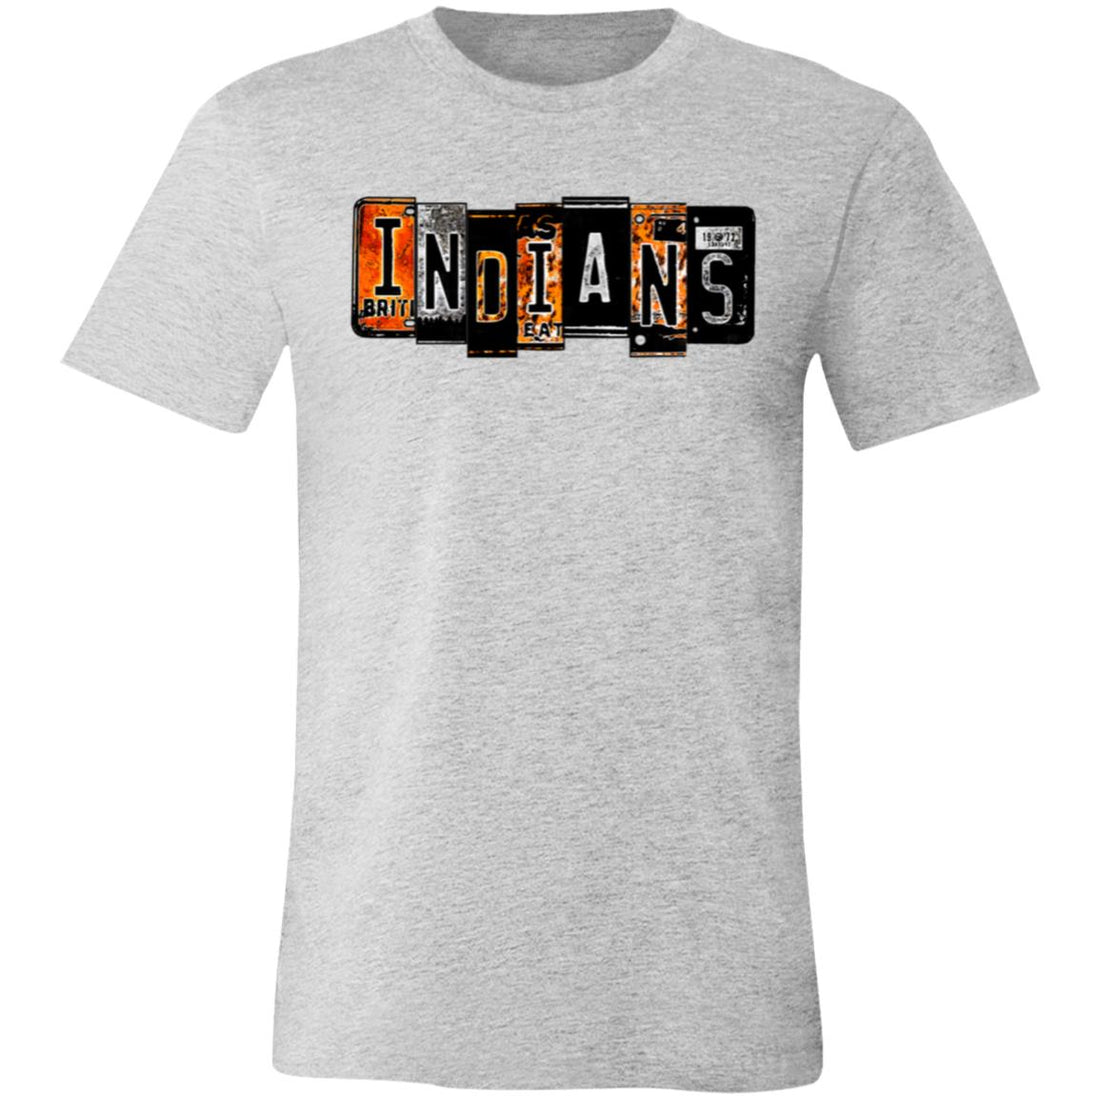 Indians Plates Short-Sleeve T-Shirt - T-Shirts - Positively Sassy - Indians Plates Short-Sleeve T-Shirt